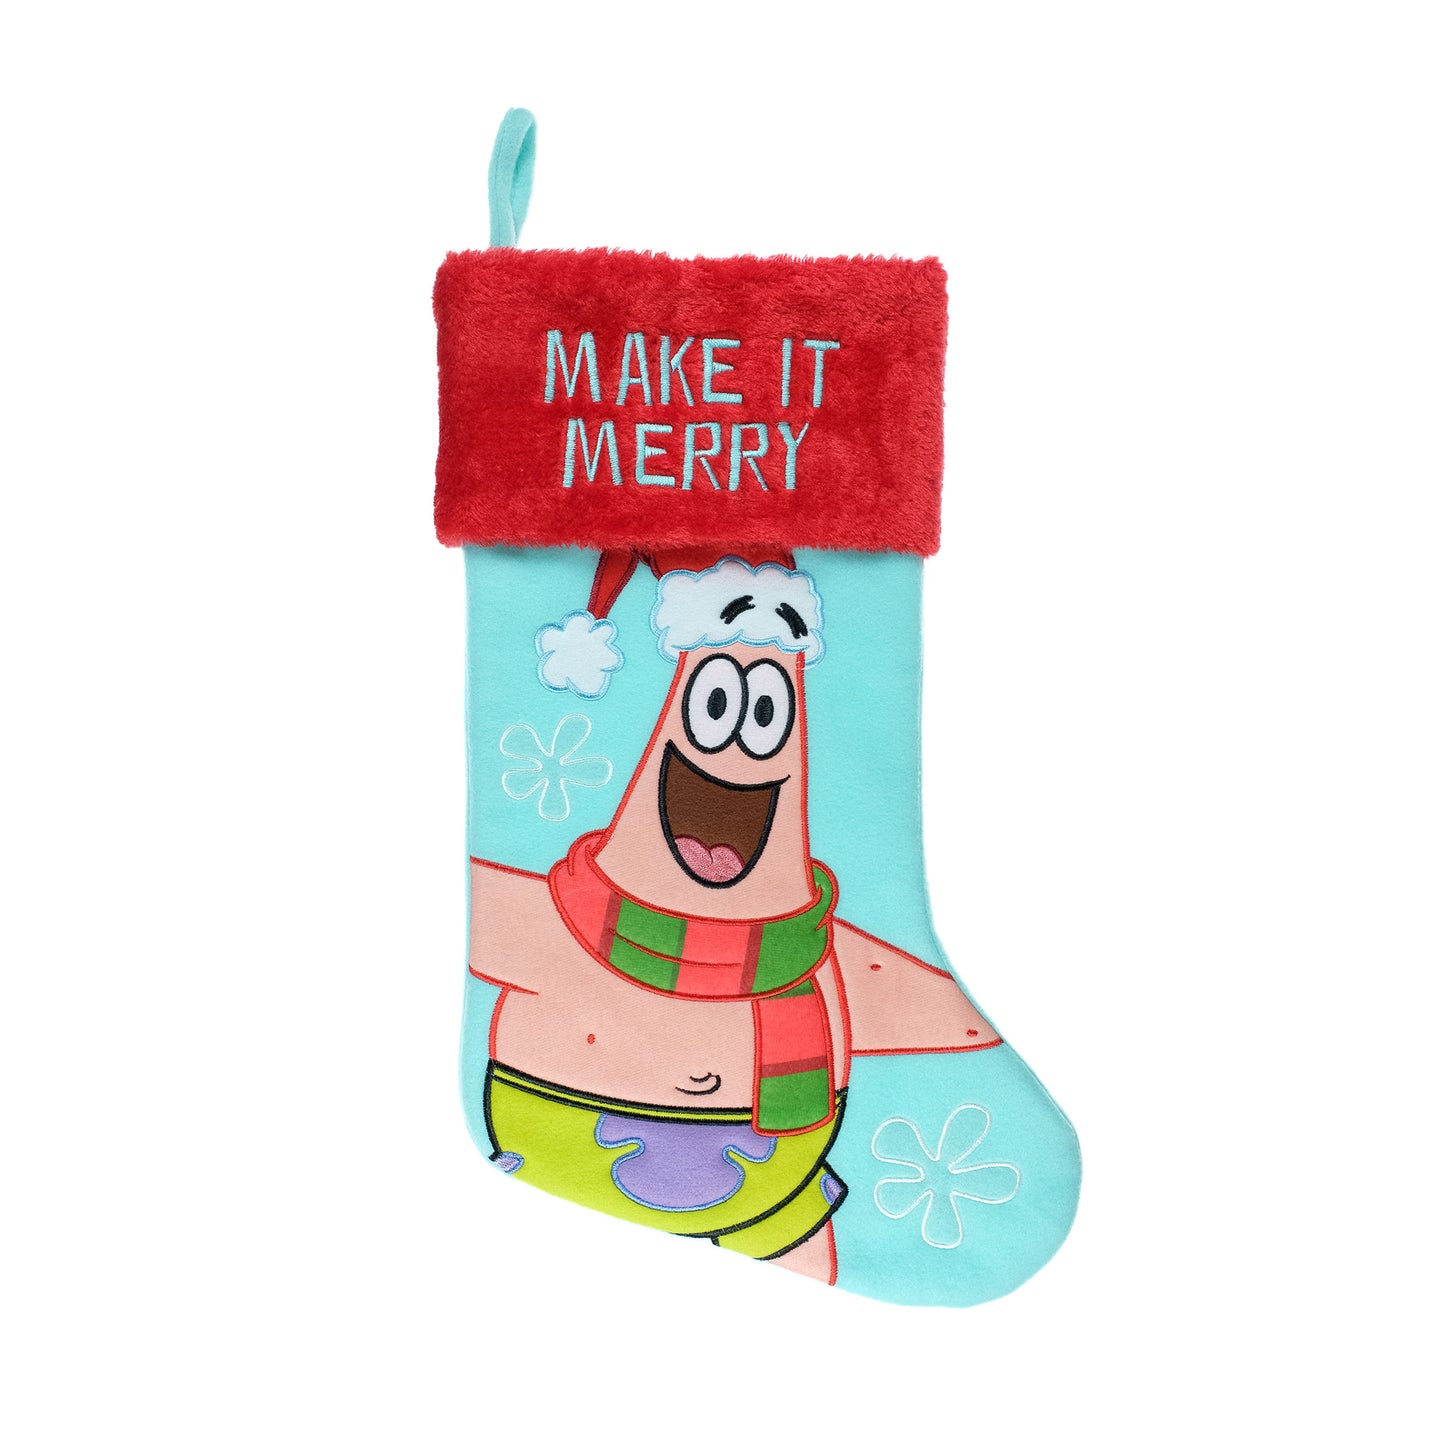 Mini merry Christmas SpongeBob stocking ornament